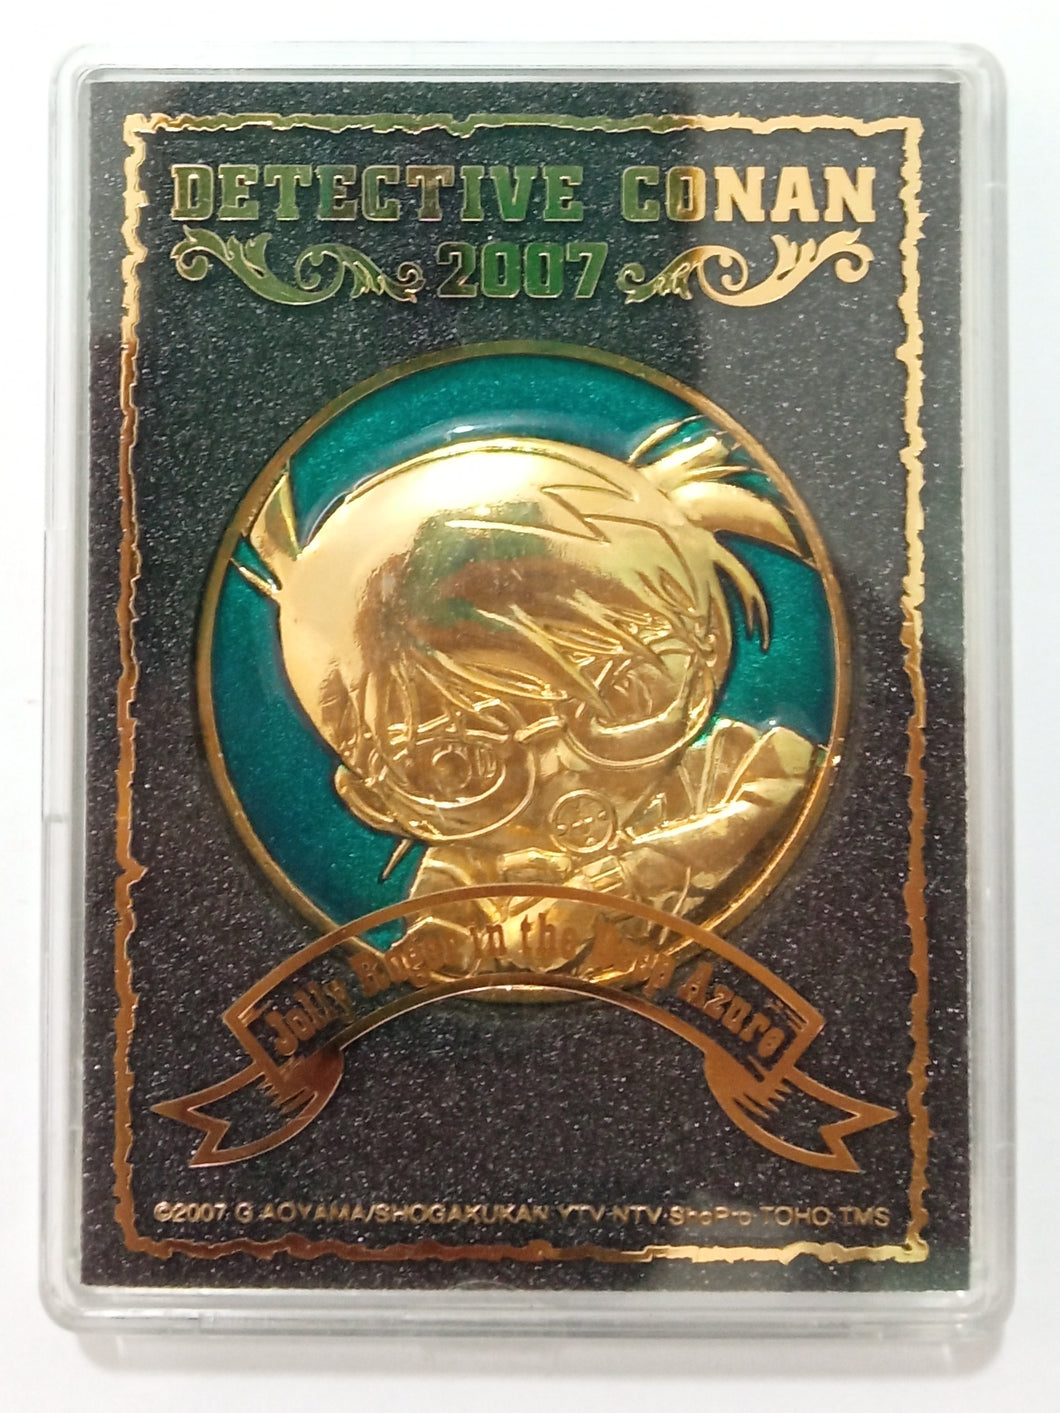 Detective Conan Azure Coffin 2007 Limited Edition Commemorative Medal